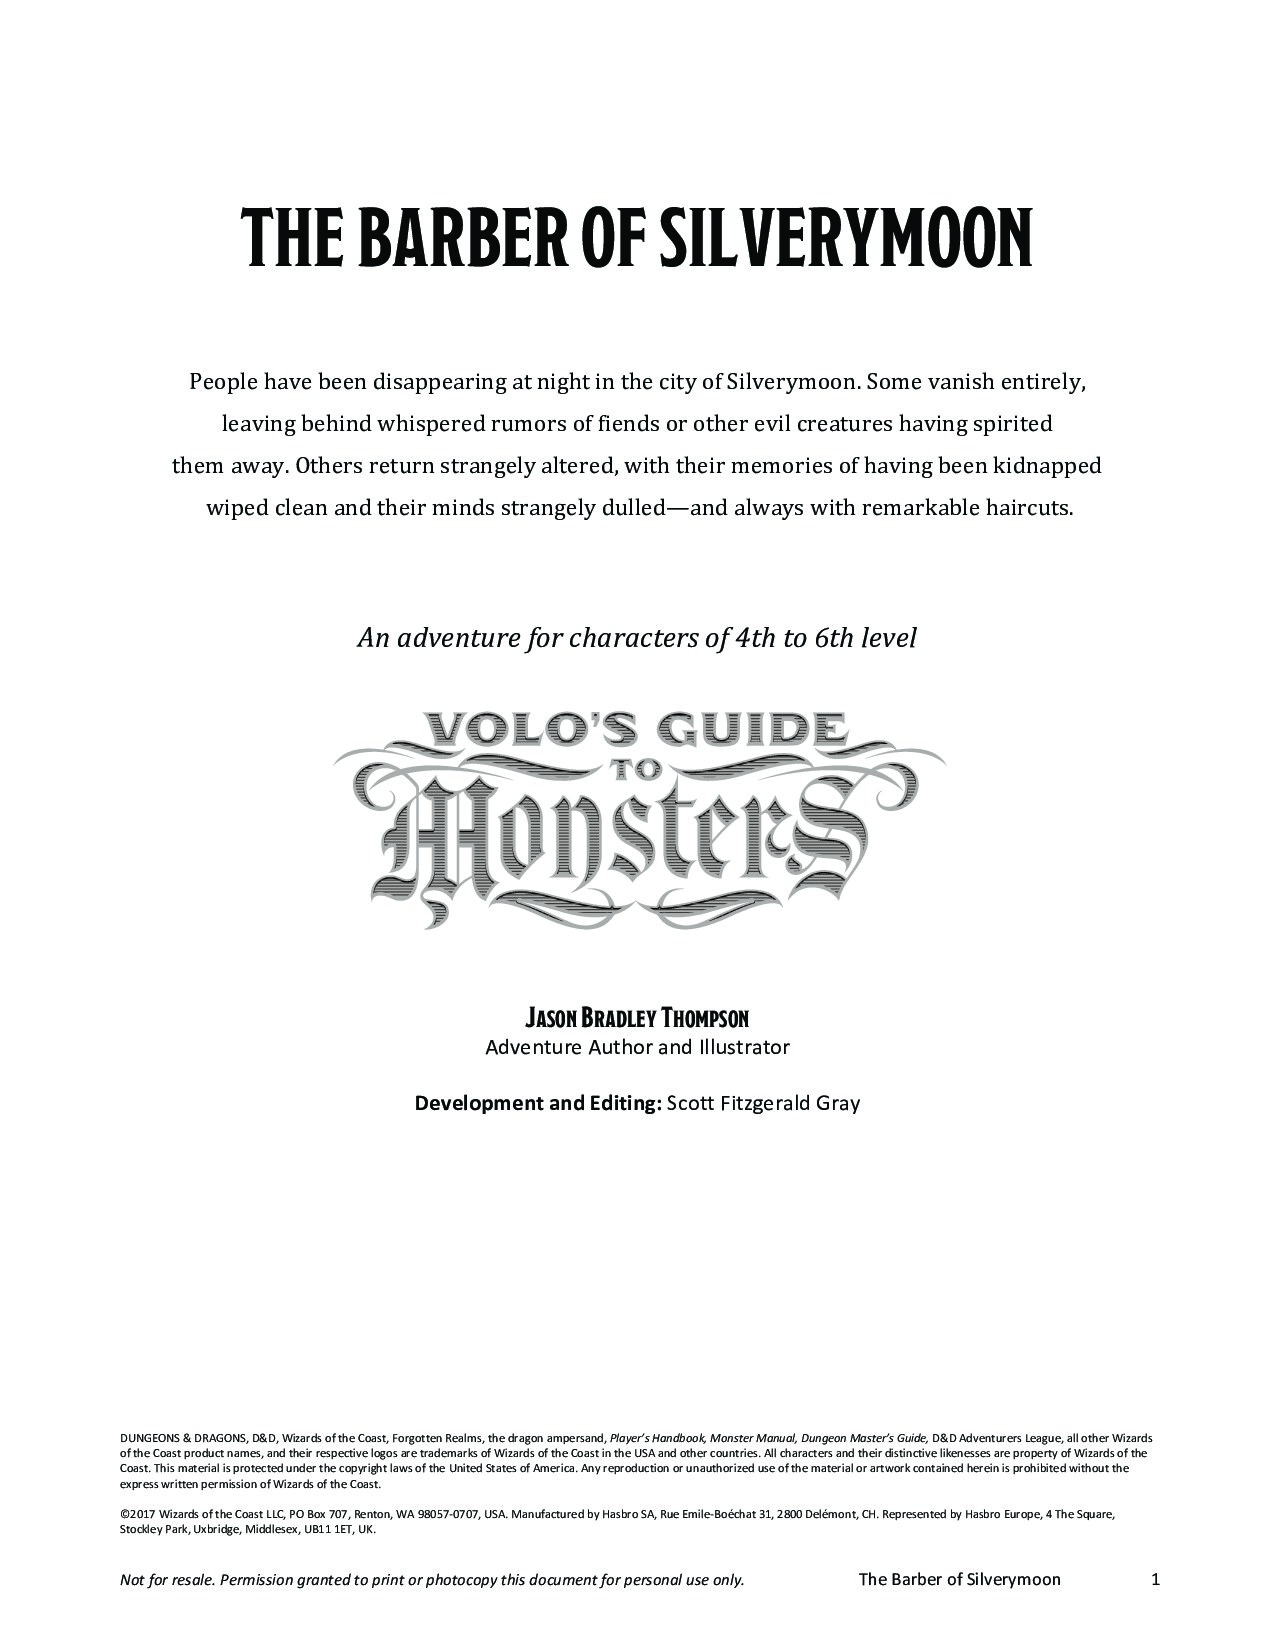 Microsoft Word - The Barber of Silverymoonv2 SFG.docx